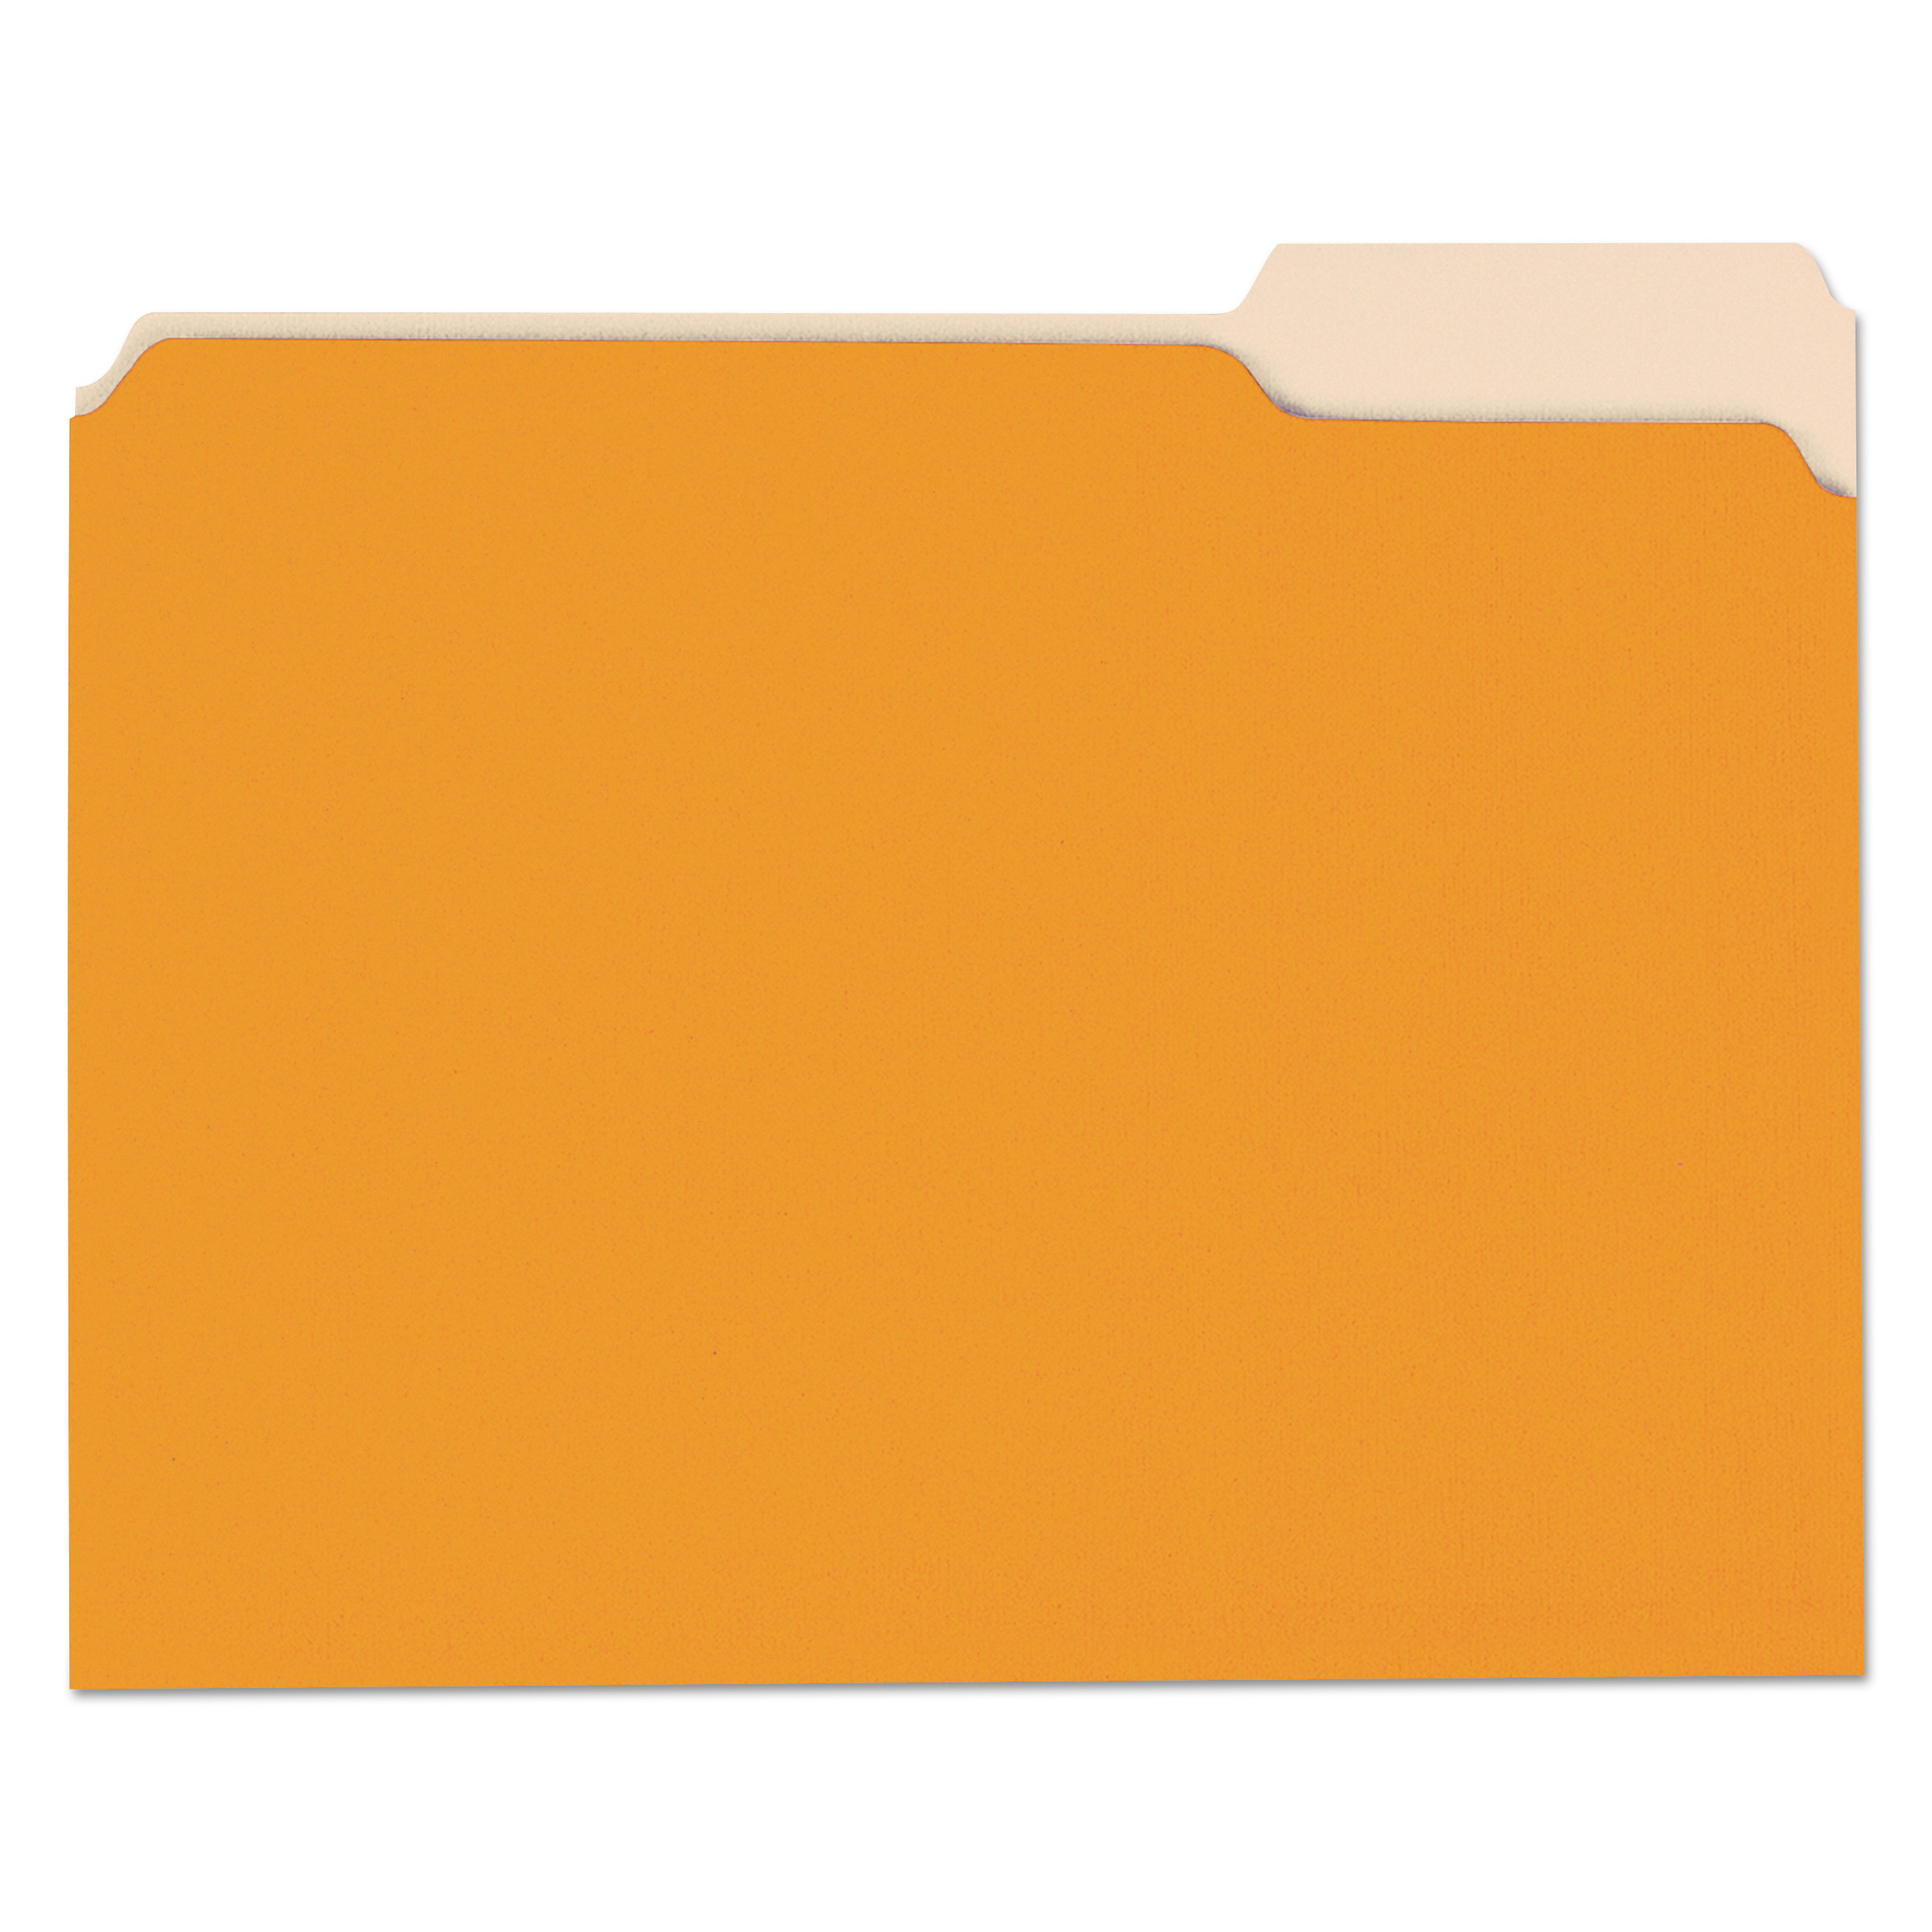  Universal UNV10507 Deluxe Colored Top Tab File Folders, 1/3-Cut Tabs, Letter Size, Orange/Light Orange, 100/Box (UNV10507) 